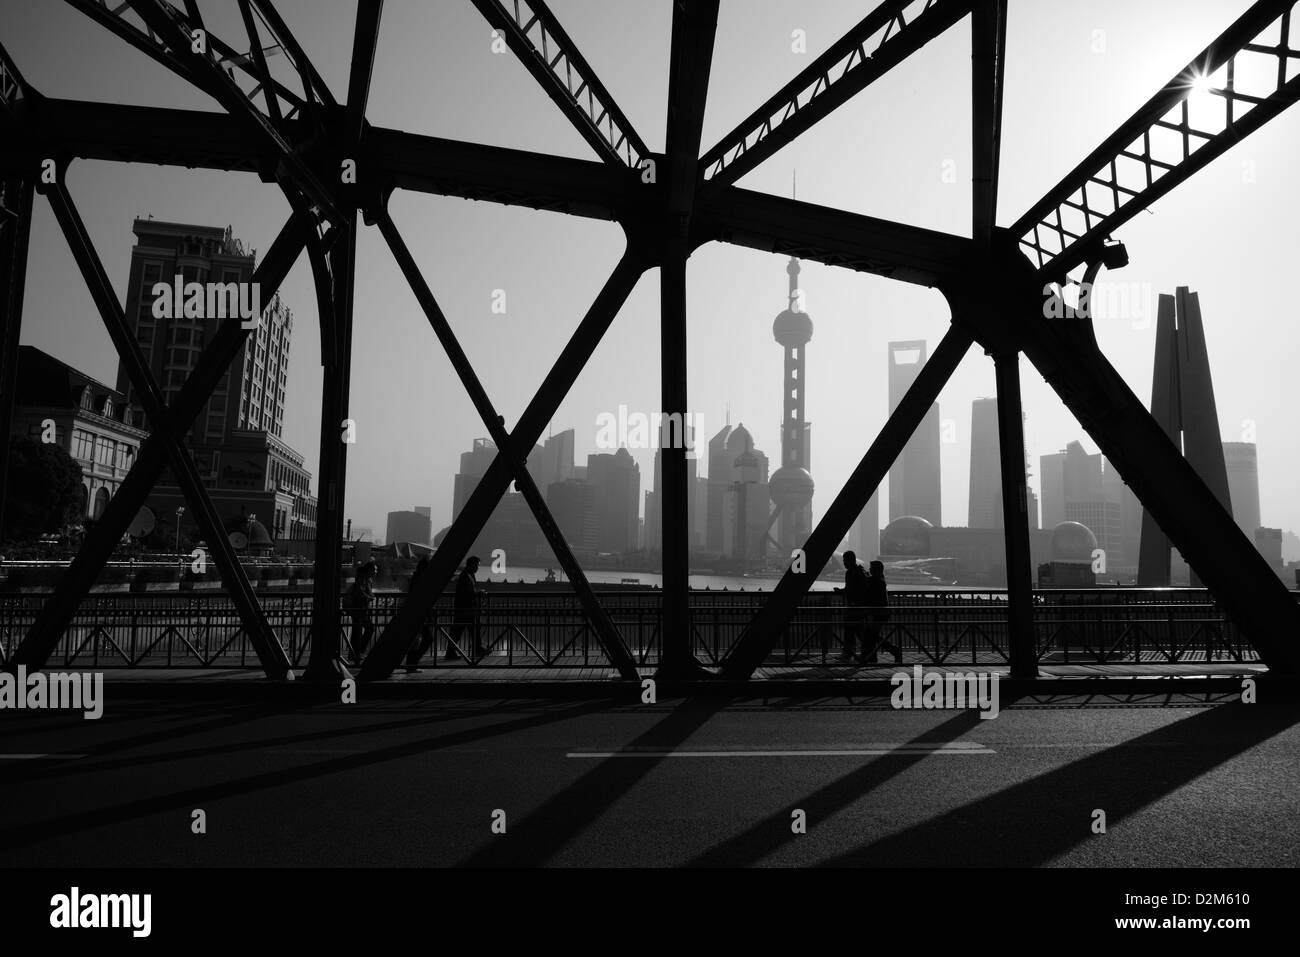 Shanghai City historical Waibaidu Steel Bridge surrounded by highrise building located along Huangpu River. China. Stock Photo